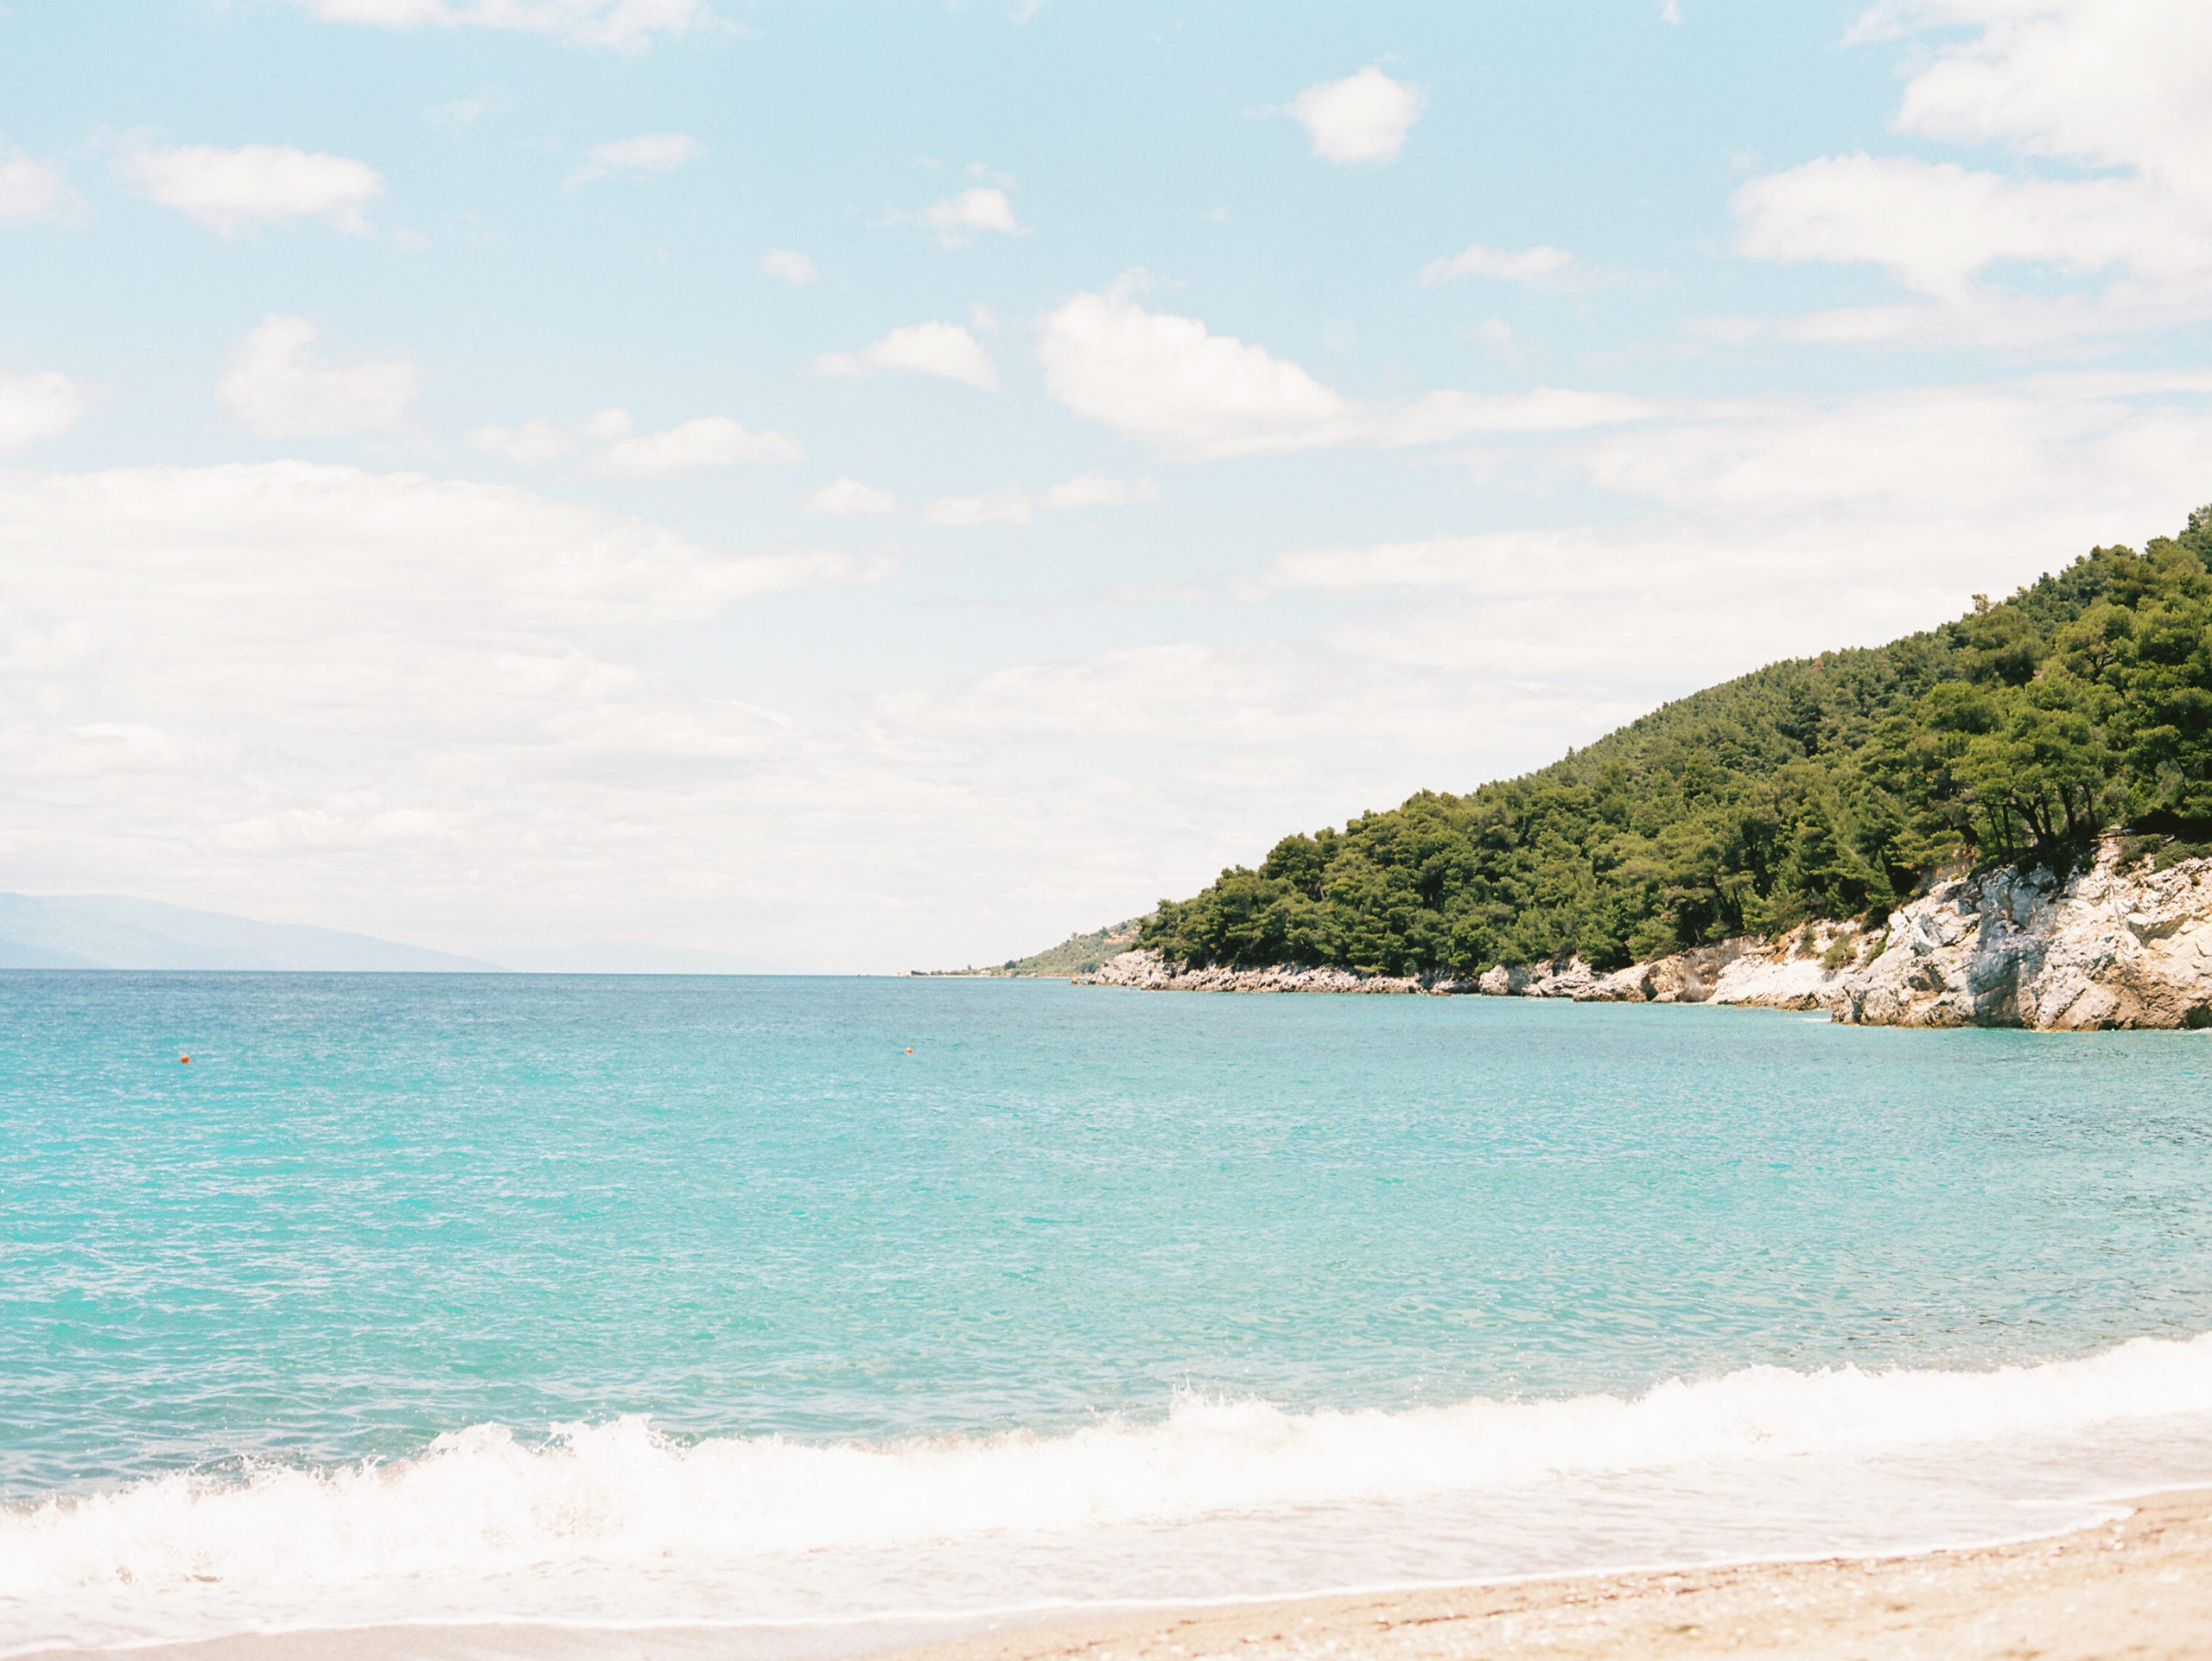 Greece Beach wedding location on Skopelos island, where Mama Mia was filmed!